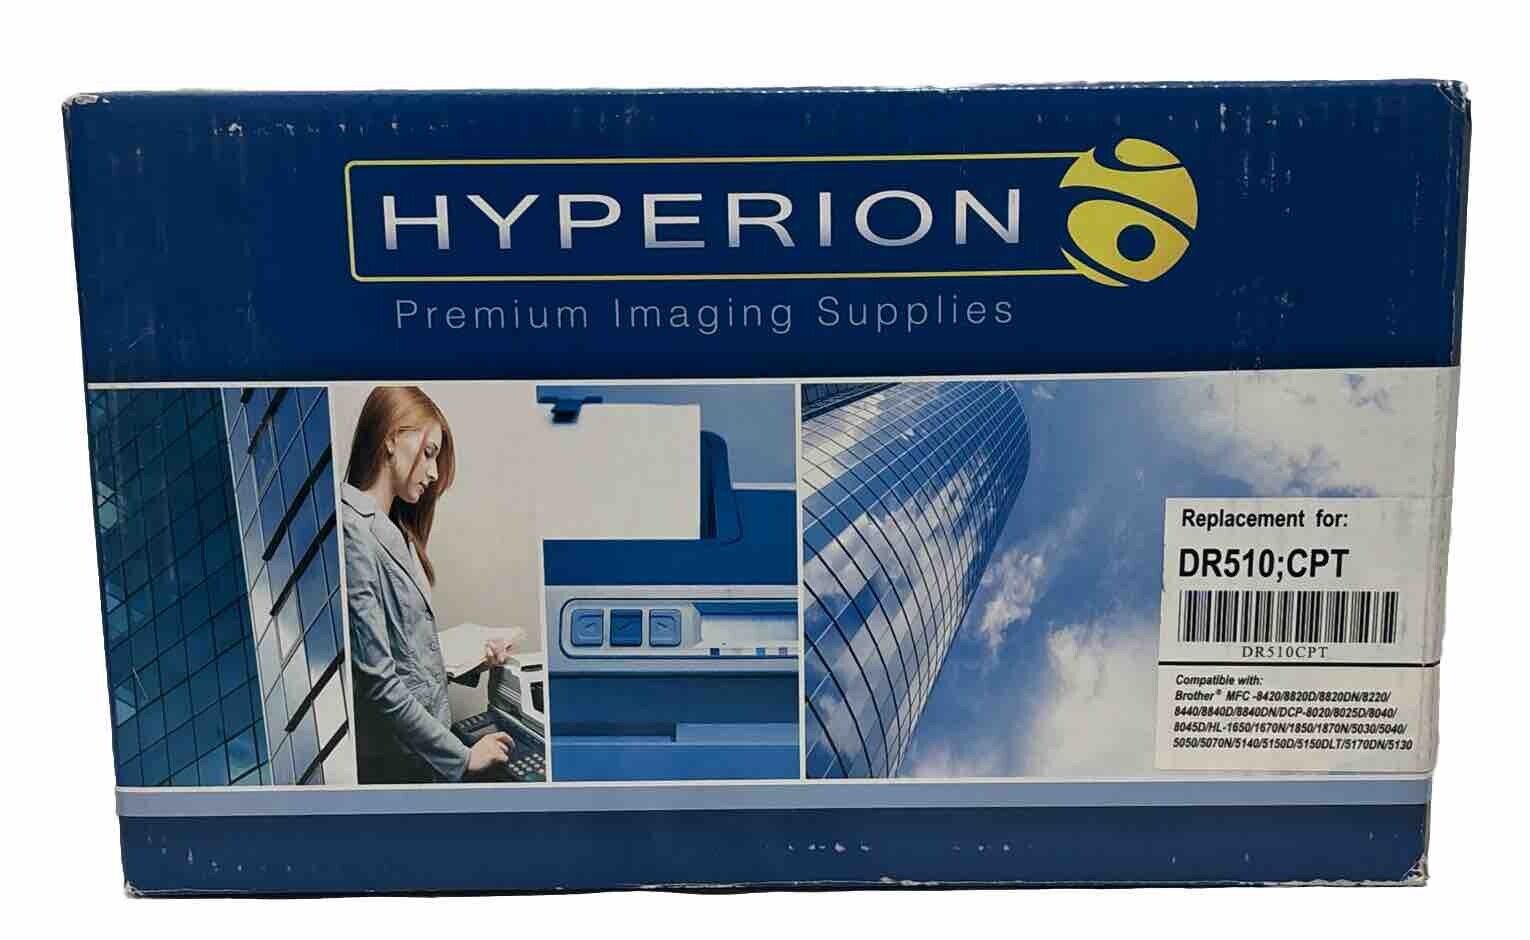 Hyperion Premium Imaging Supplies DR510CPT